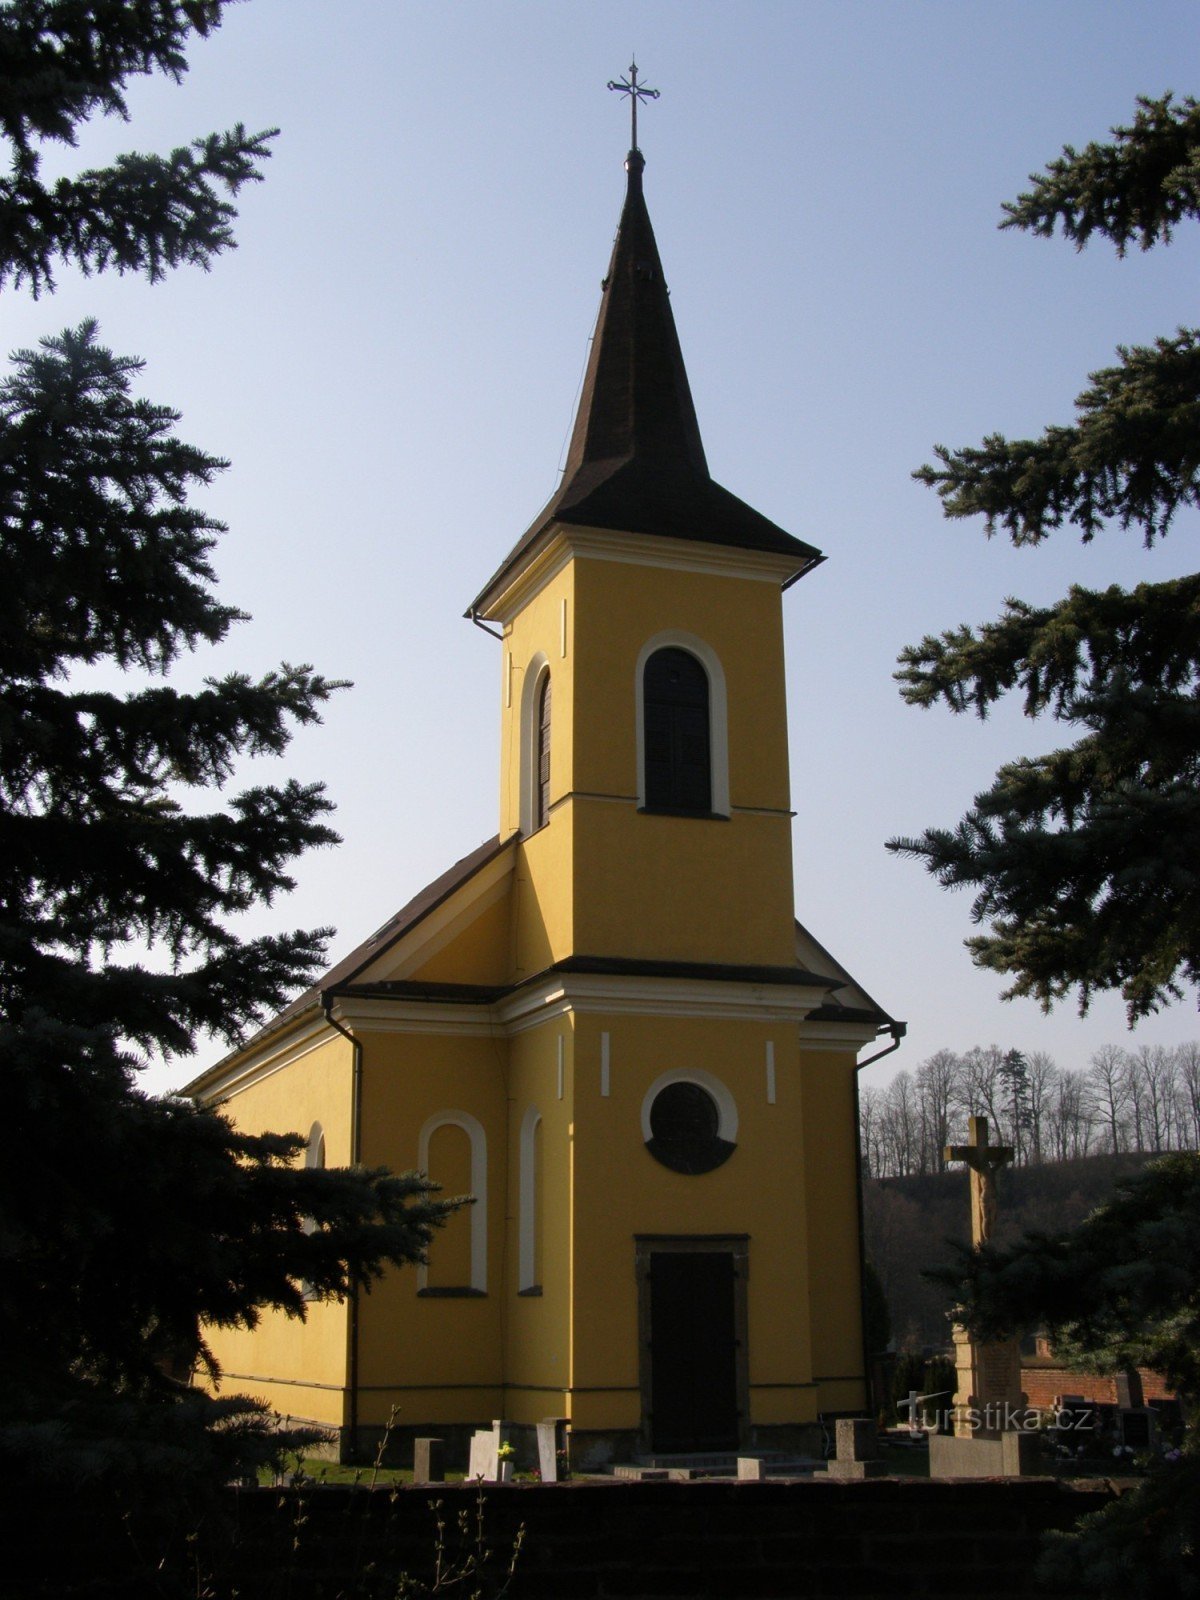 Helvíkovice - Kapelle St. Antonina